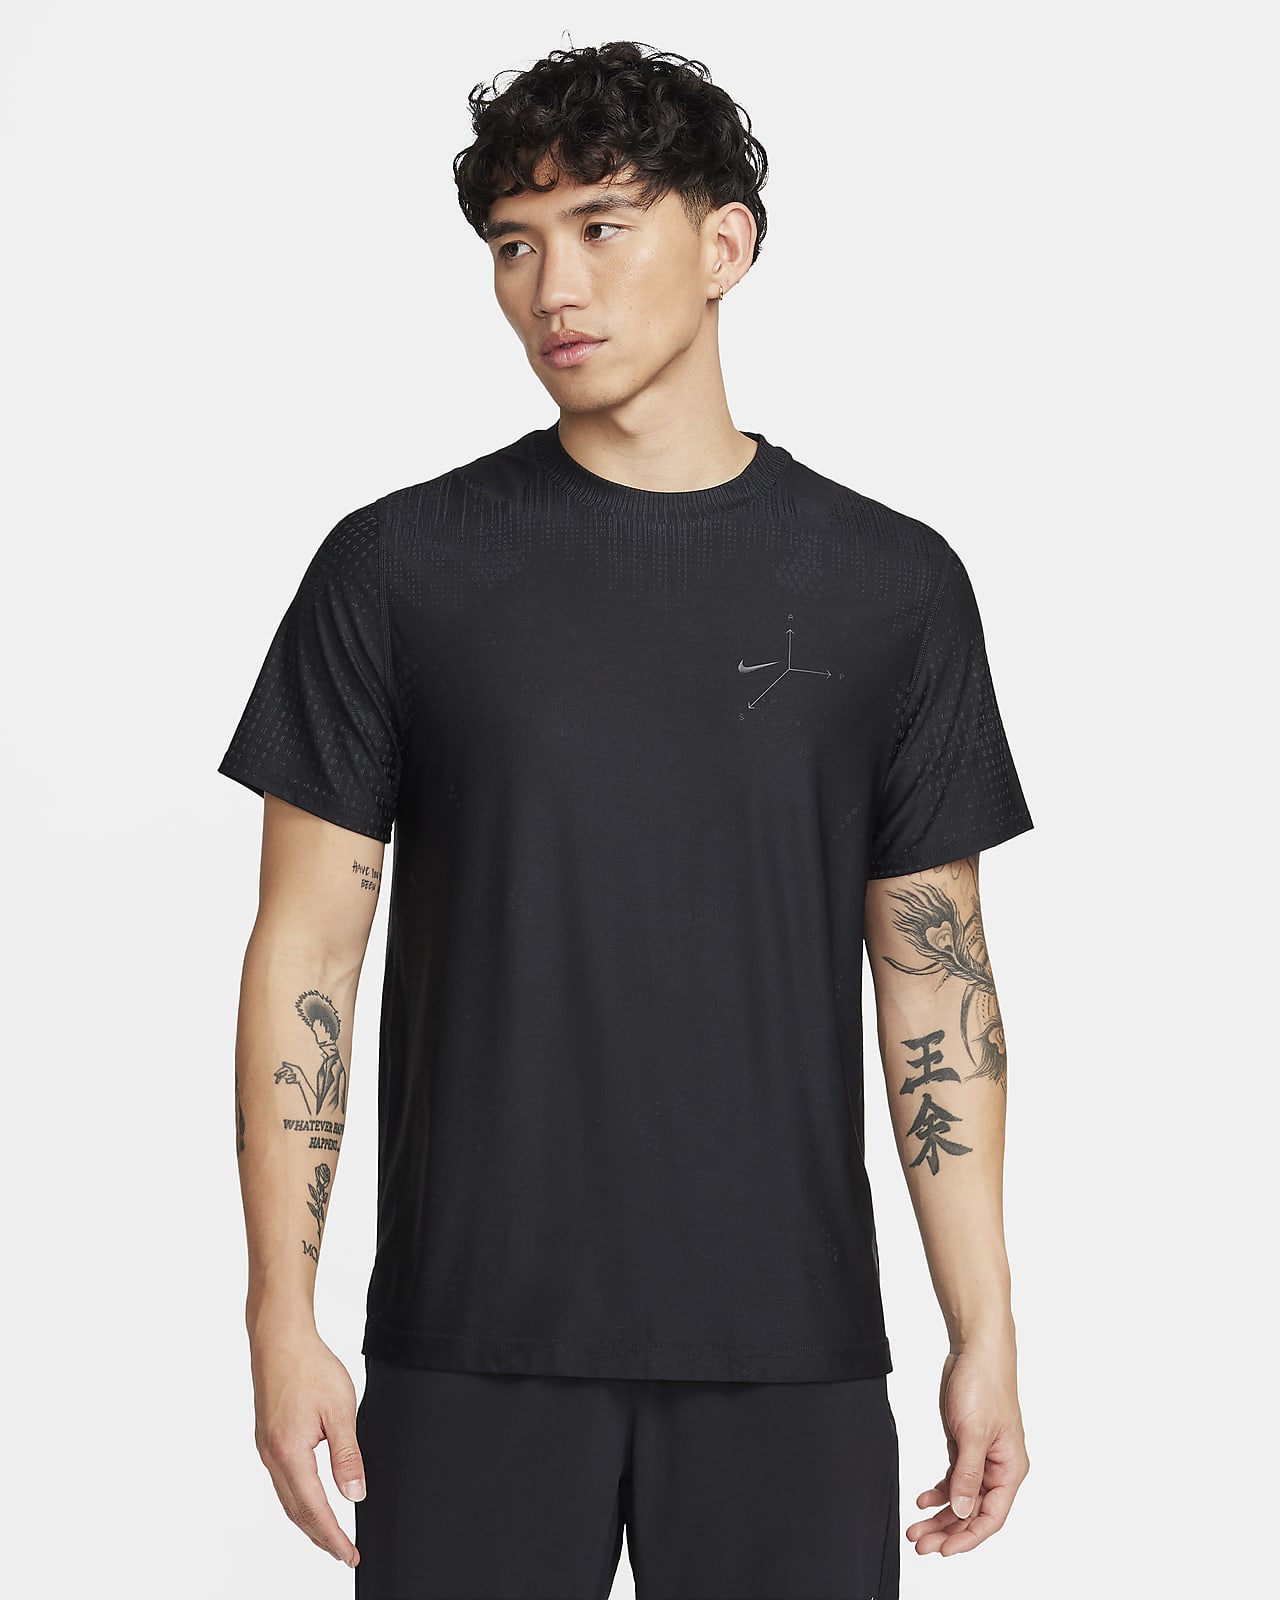 Nike A.P.S. Camiseta de manga corta Dri-FIT versátil con protección ADV - Hombre